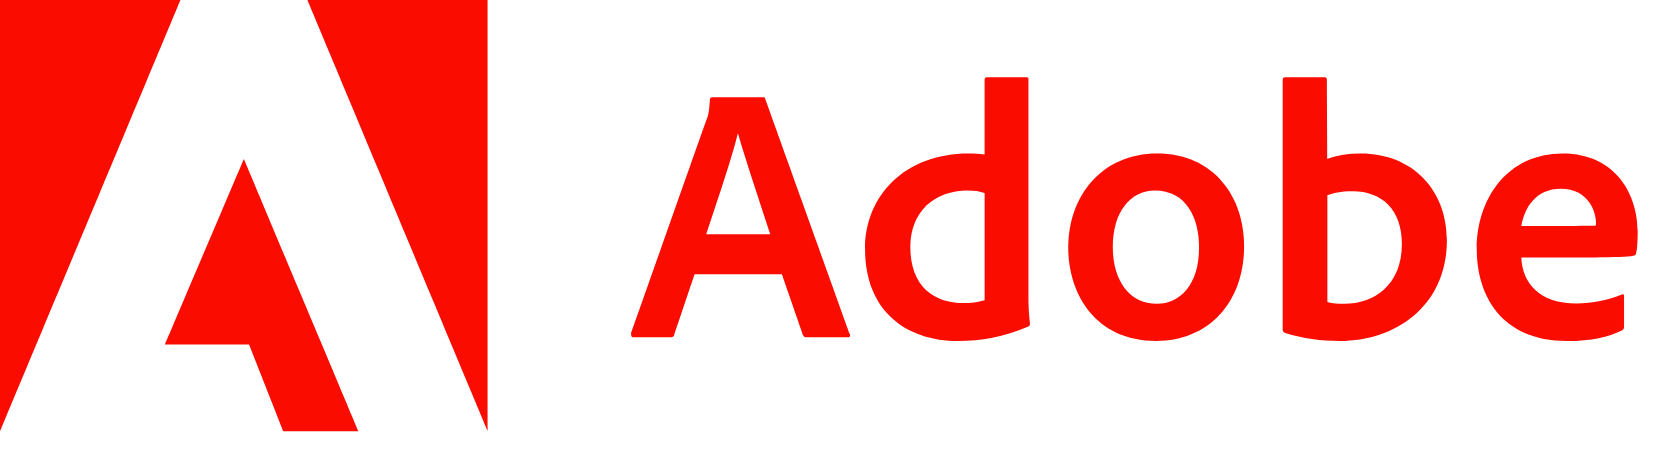 Adobe logo large (transparent PNG)